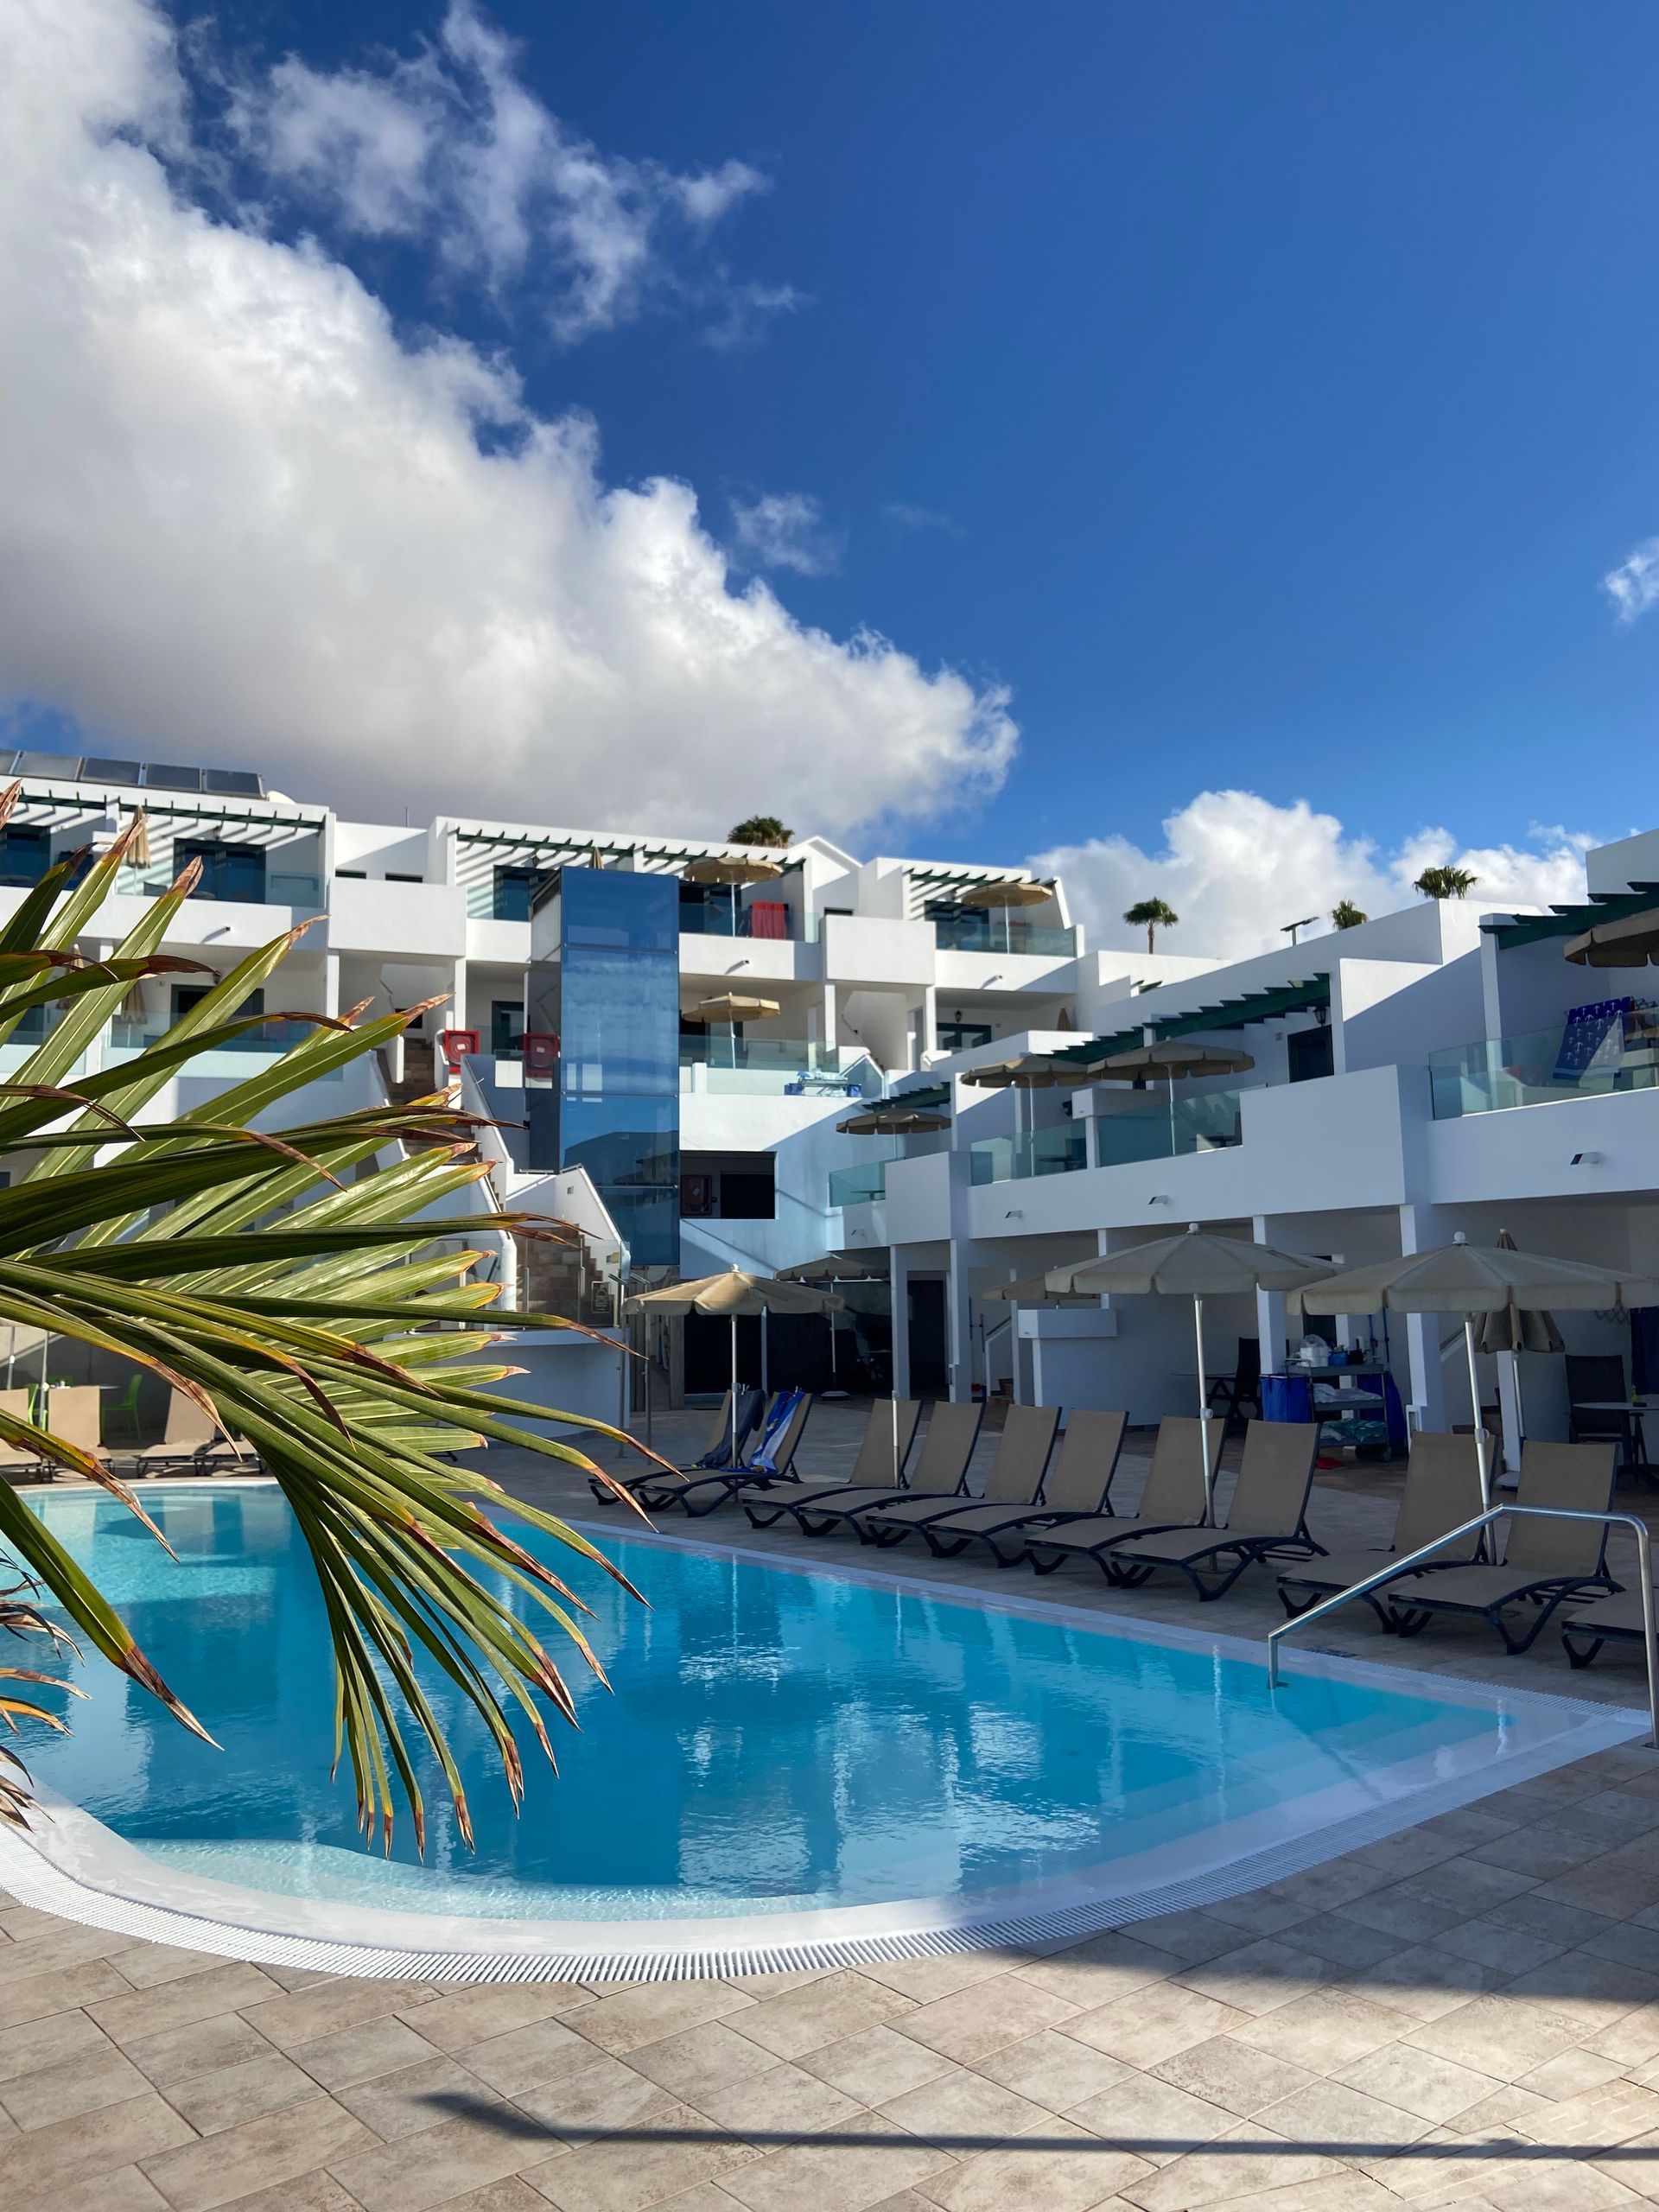 Self-catering+apartments+in+Lanzarote+Villa+Canaima